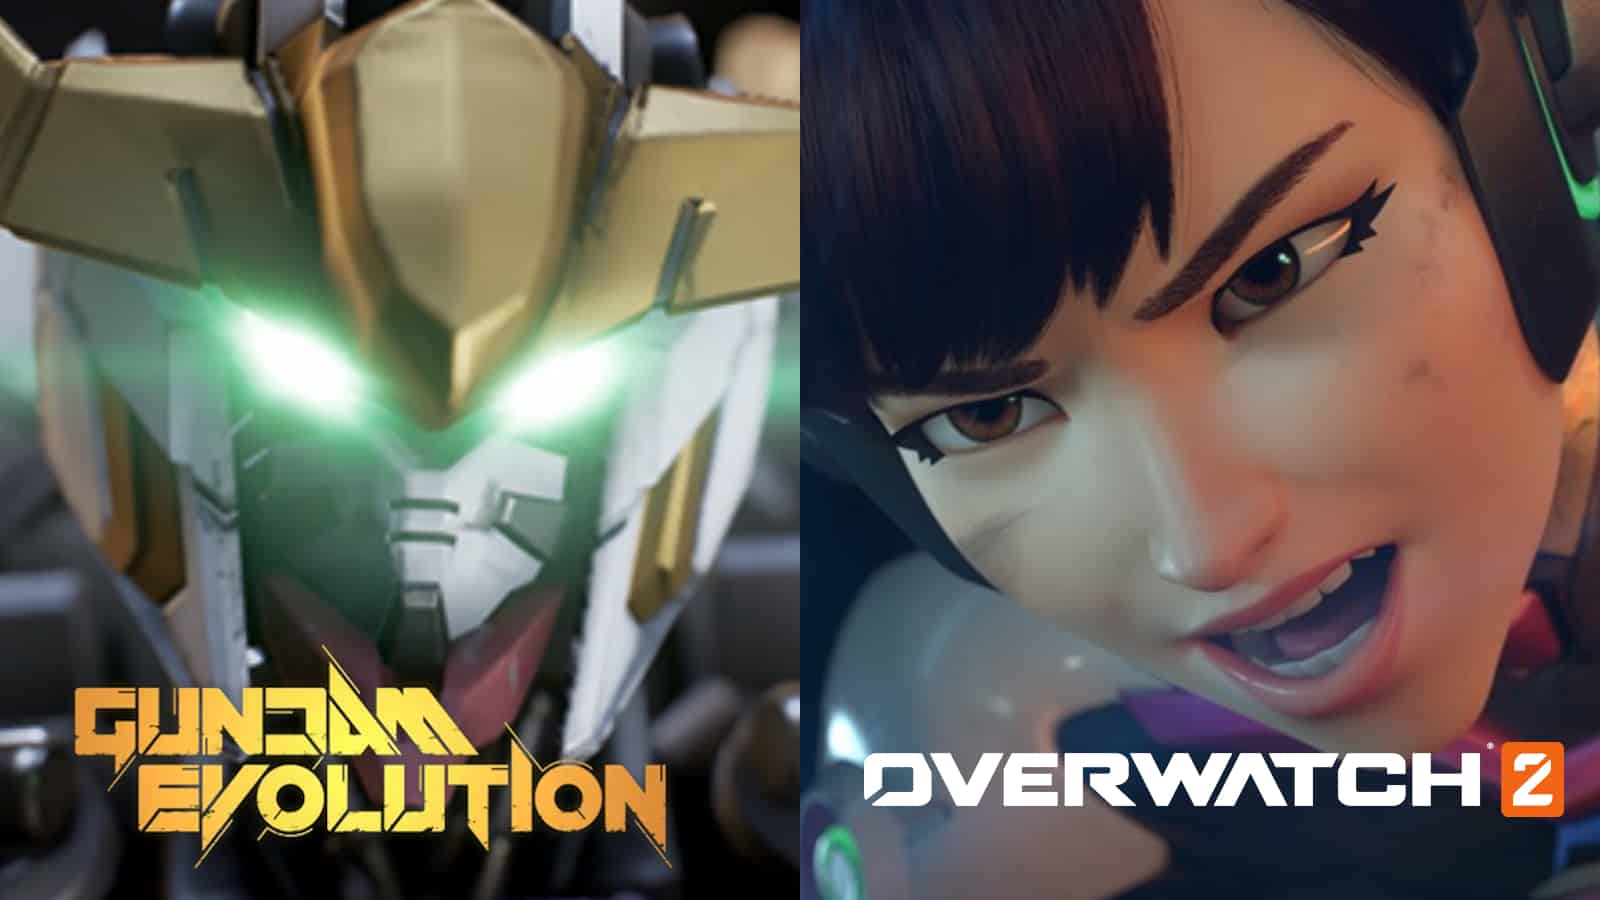 Gundam Evolution vs Overwatch 2